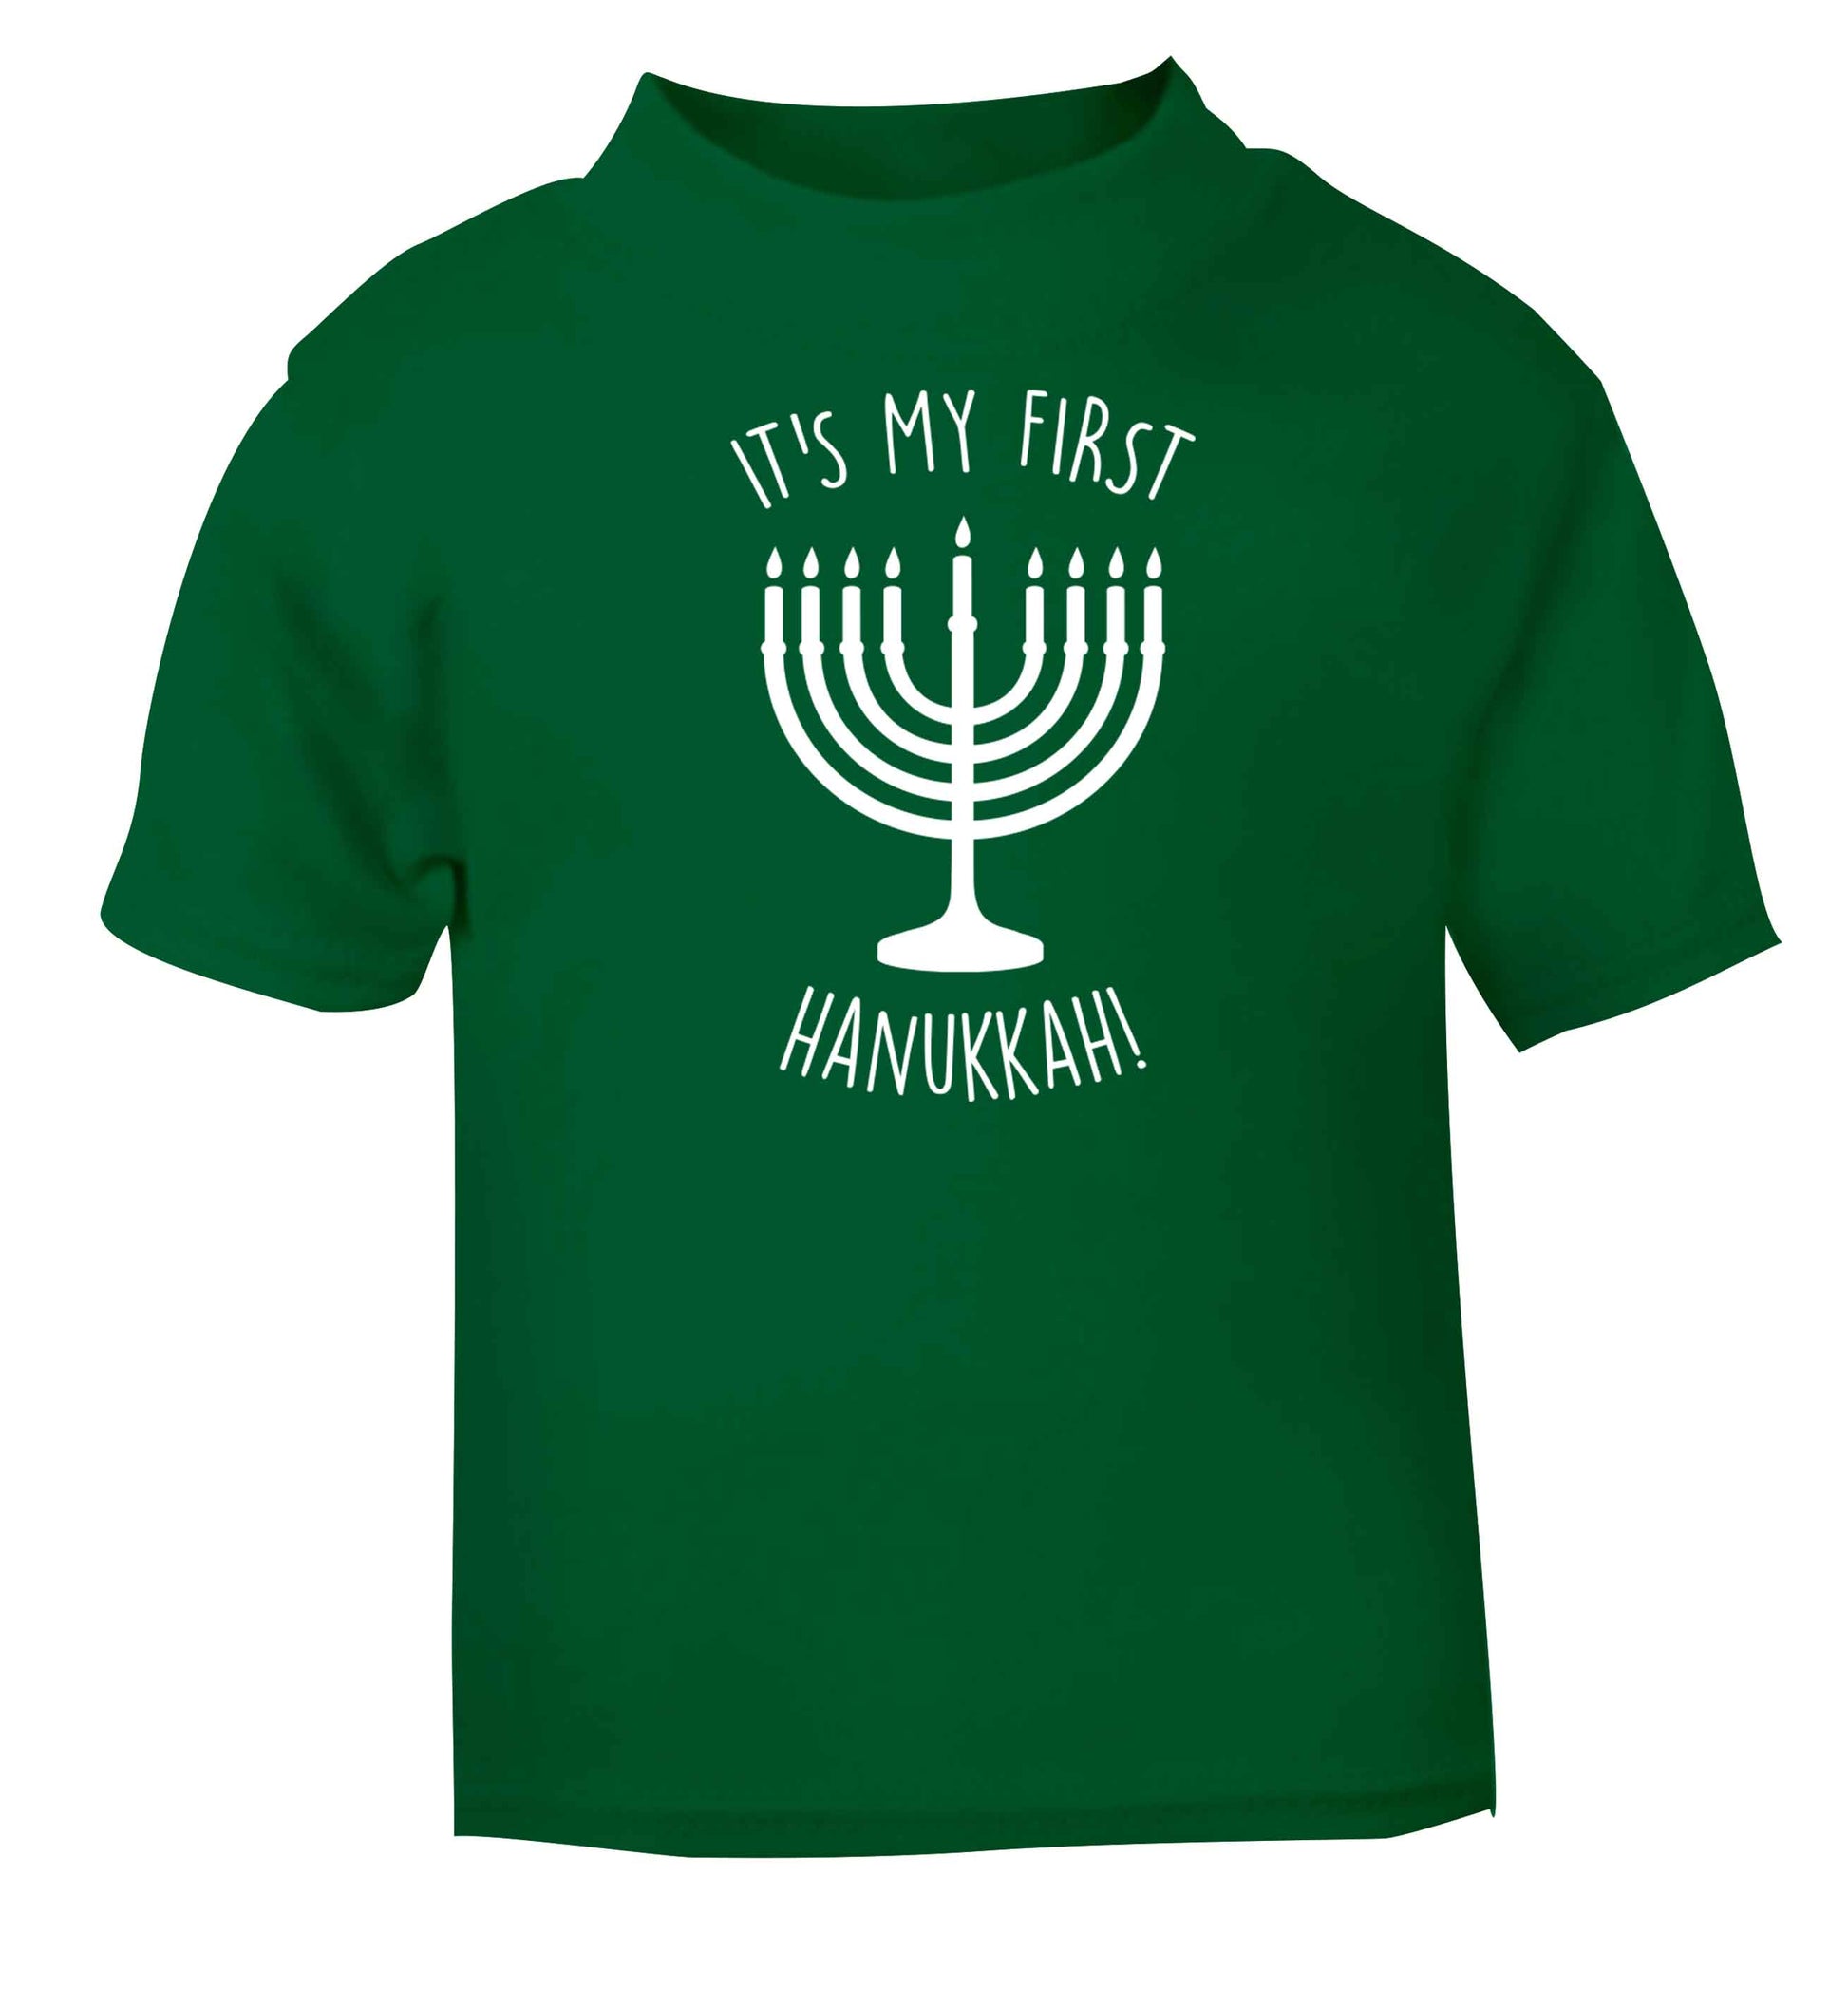 It's my first hanukkah green baby toddler Tshirt 2 Years